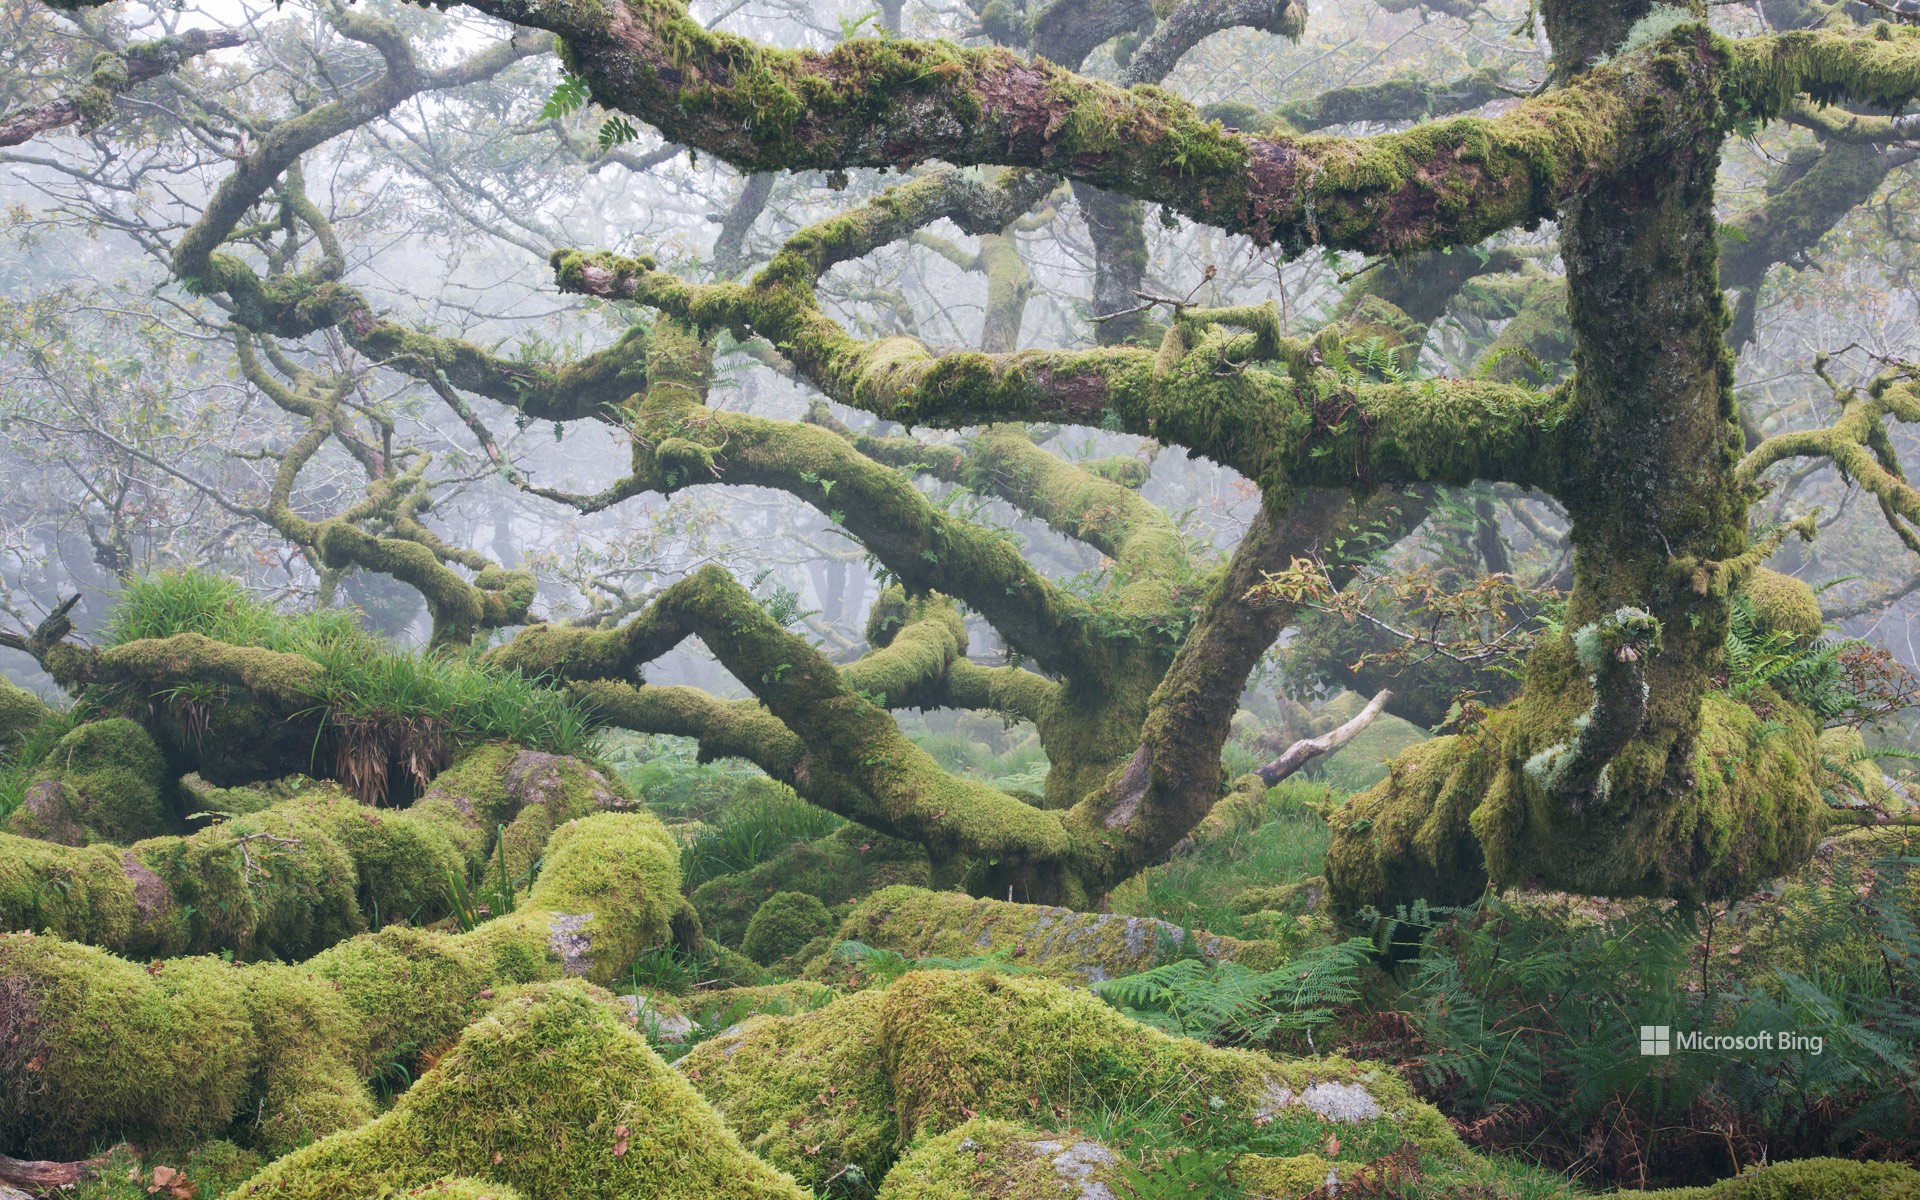 Gnarled ancient oak trees in Wistman's Wood, Dartmoor National Park, Devon